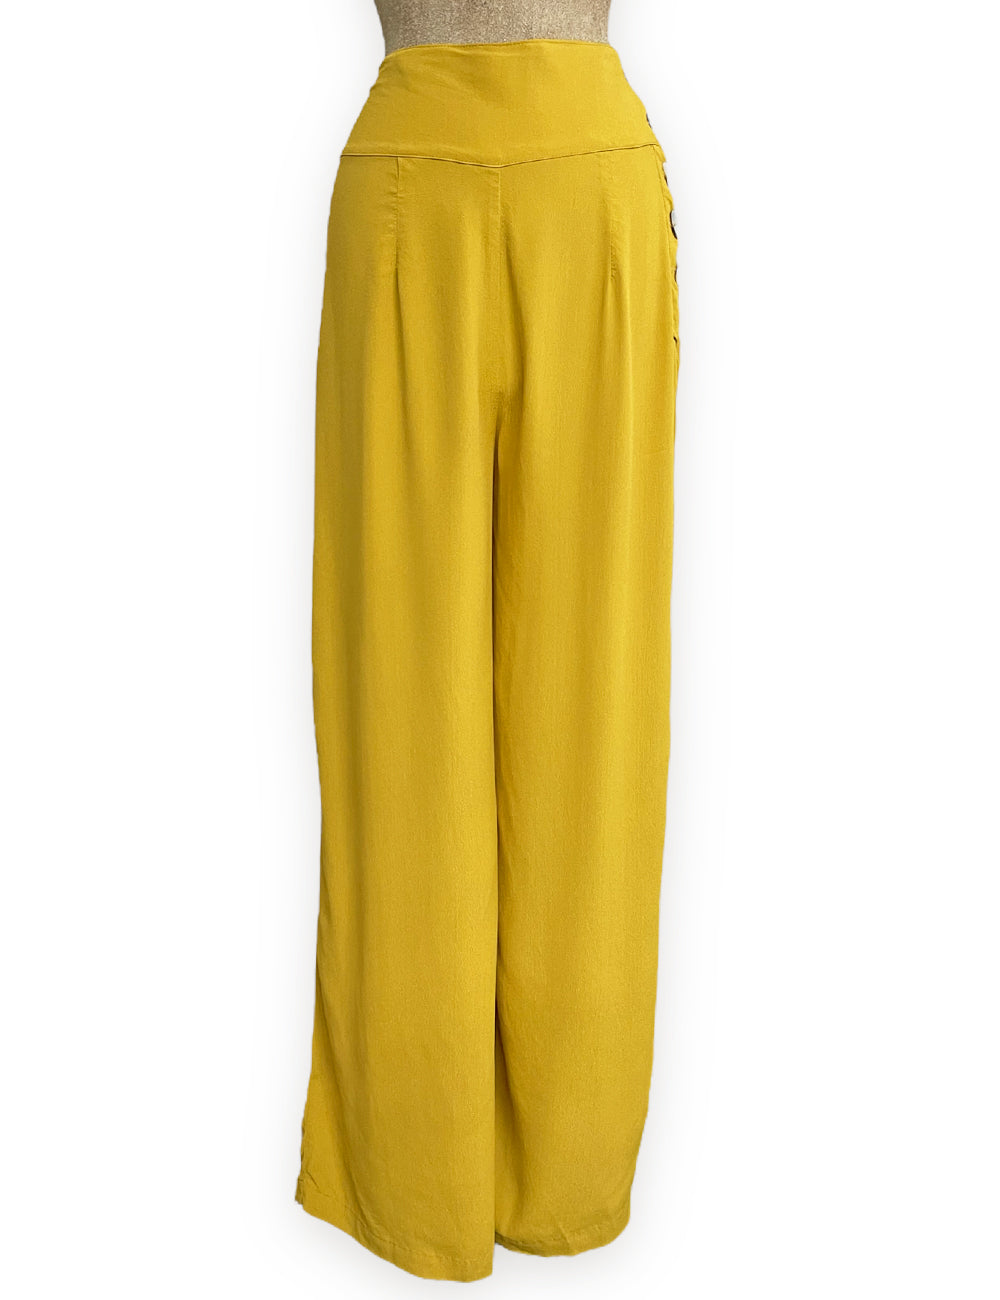 Pin by Karen Pizarro on Fashion | Yellow palazzo pants outfits, Palazzo  pants outfit, Pants